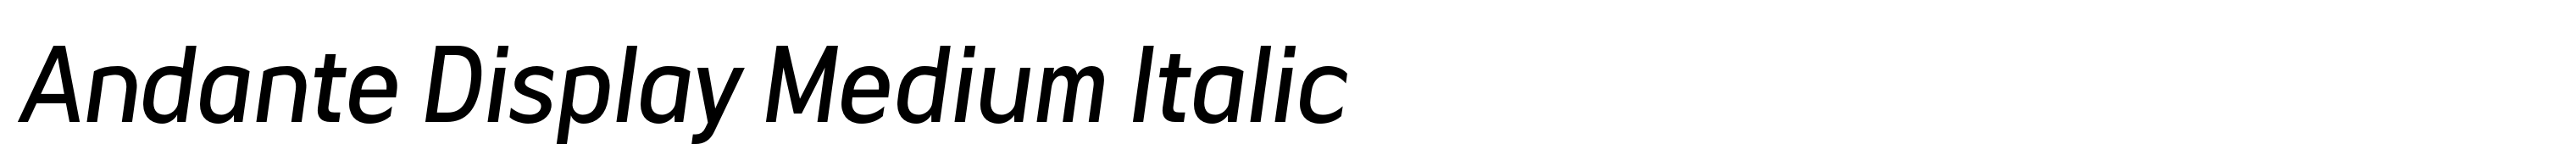 Andante Display Medium Italic